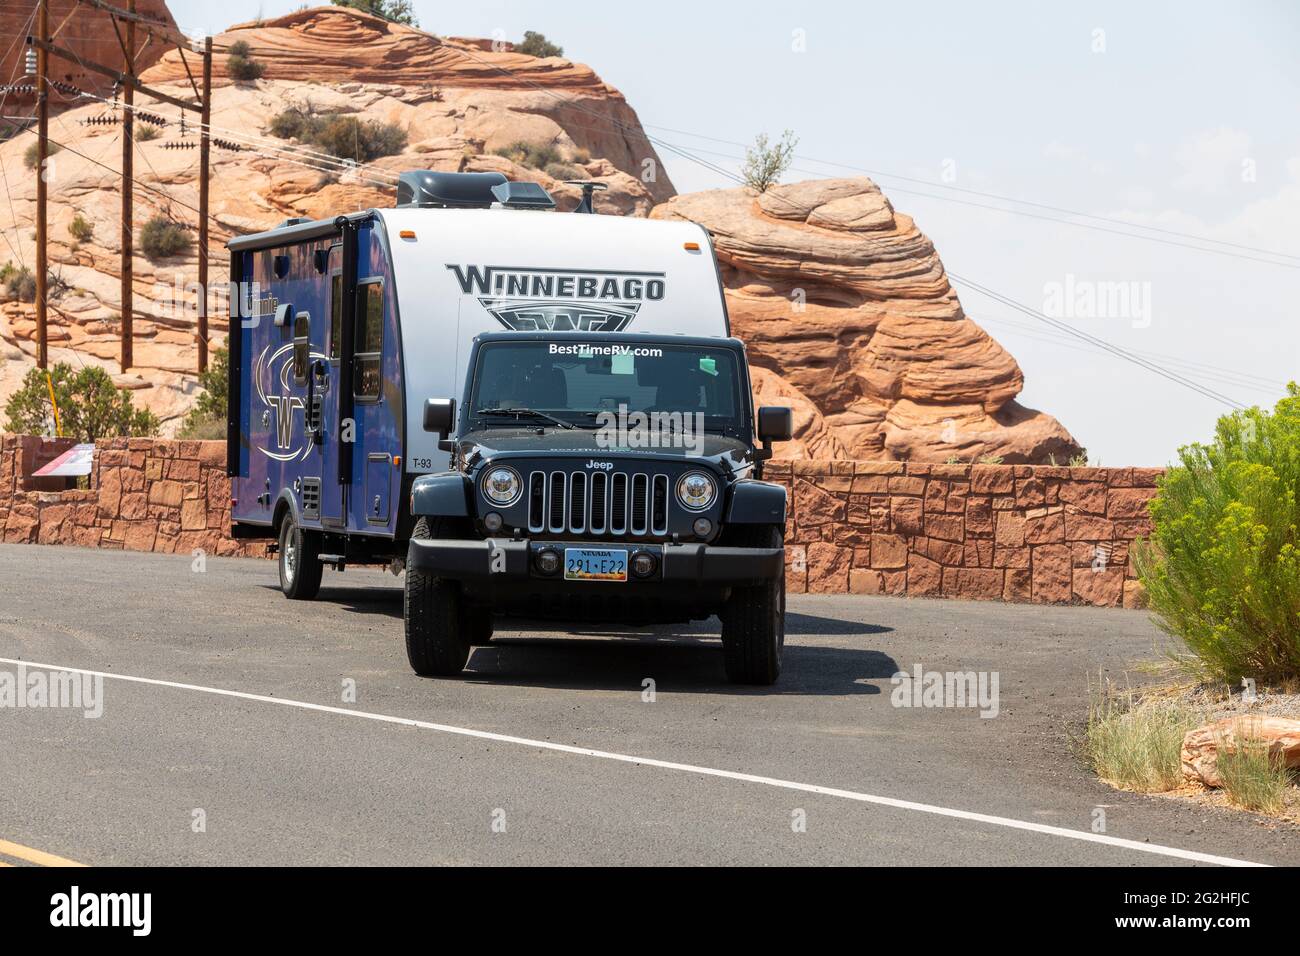 Parking Jeep and Caravan at Scenic Spot near the Escalante River at Escalante, Utah, USA Stock Photo